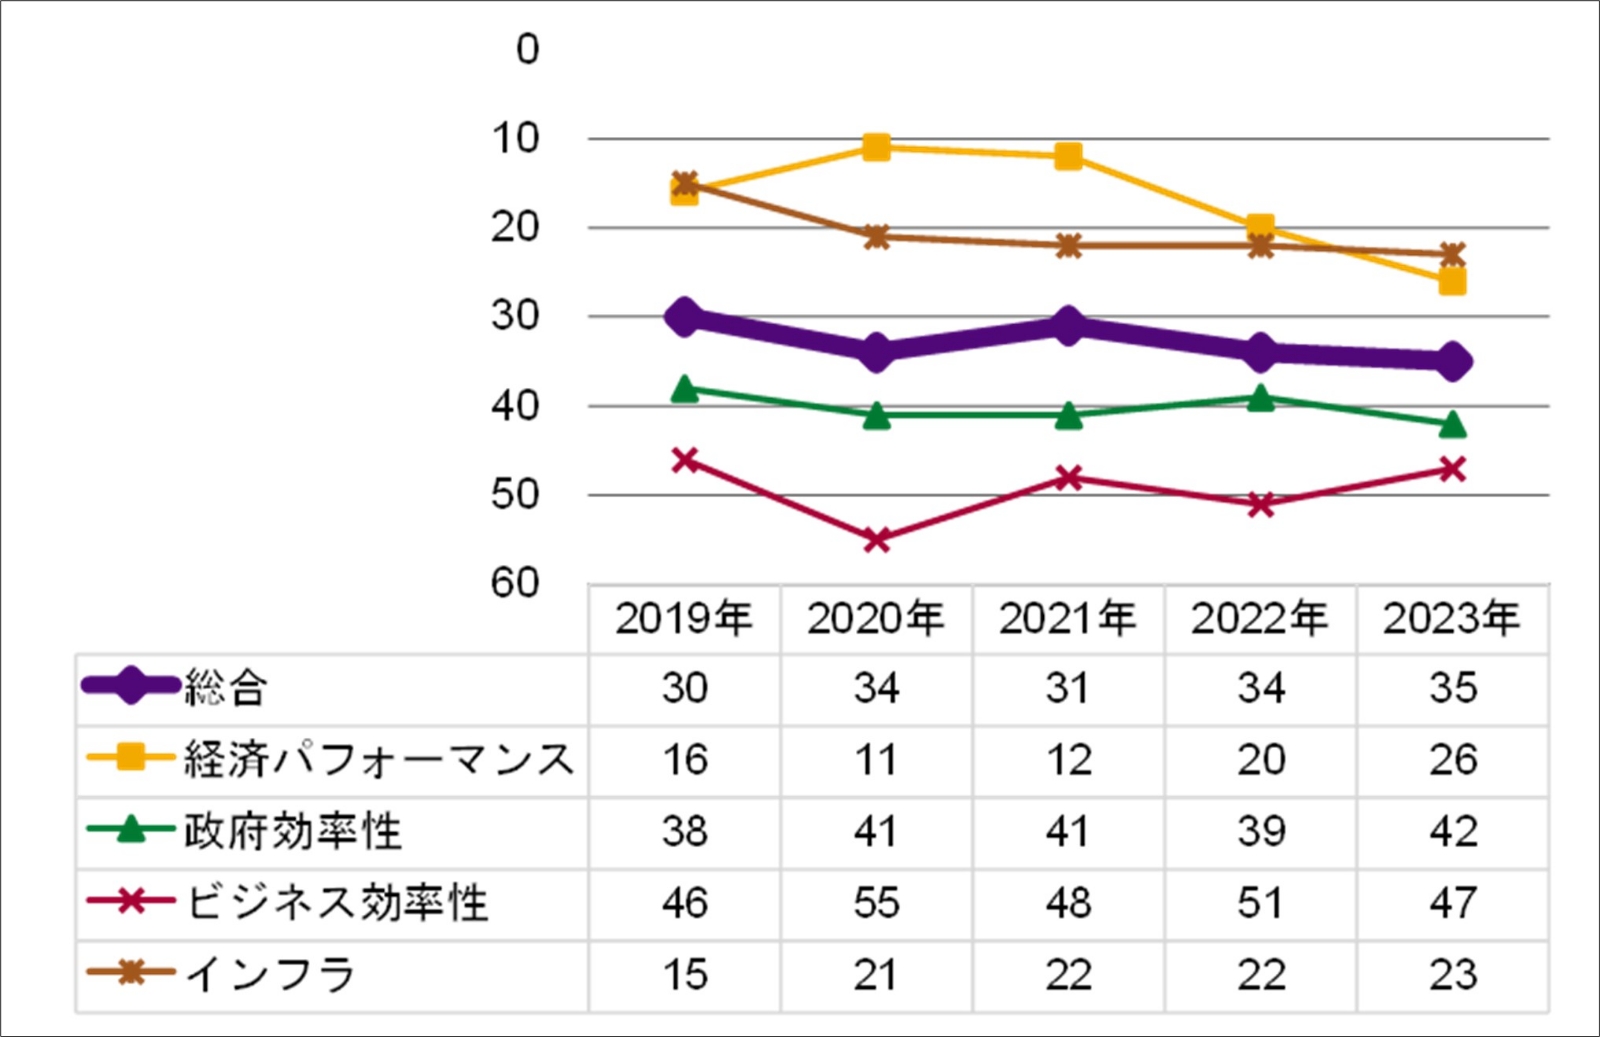 IMD世界競争力ランキングにおける日本の順位の推移